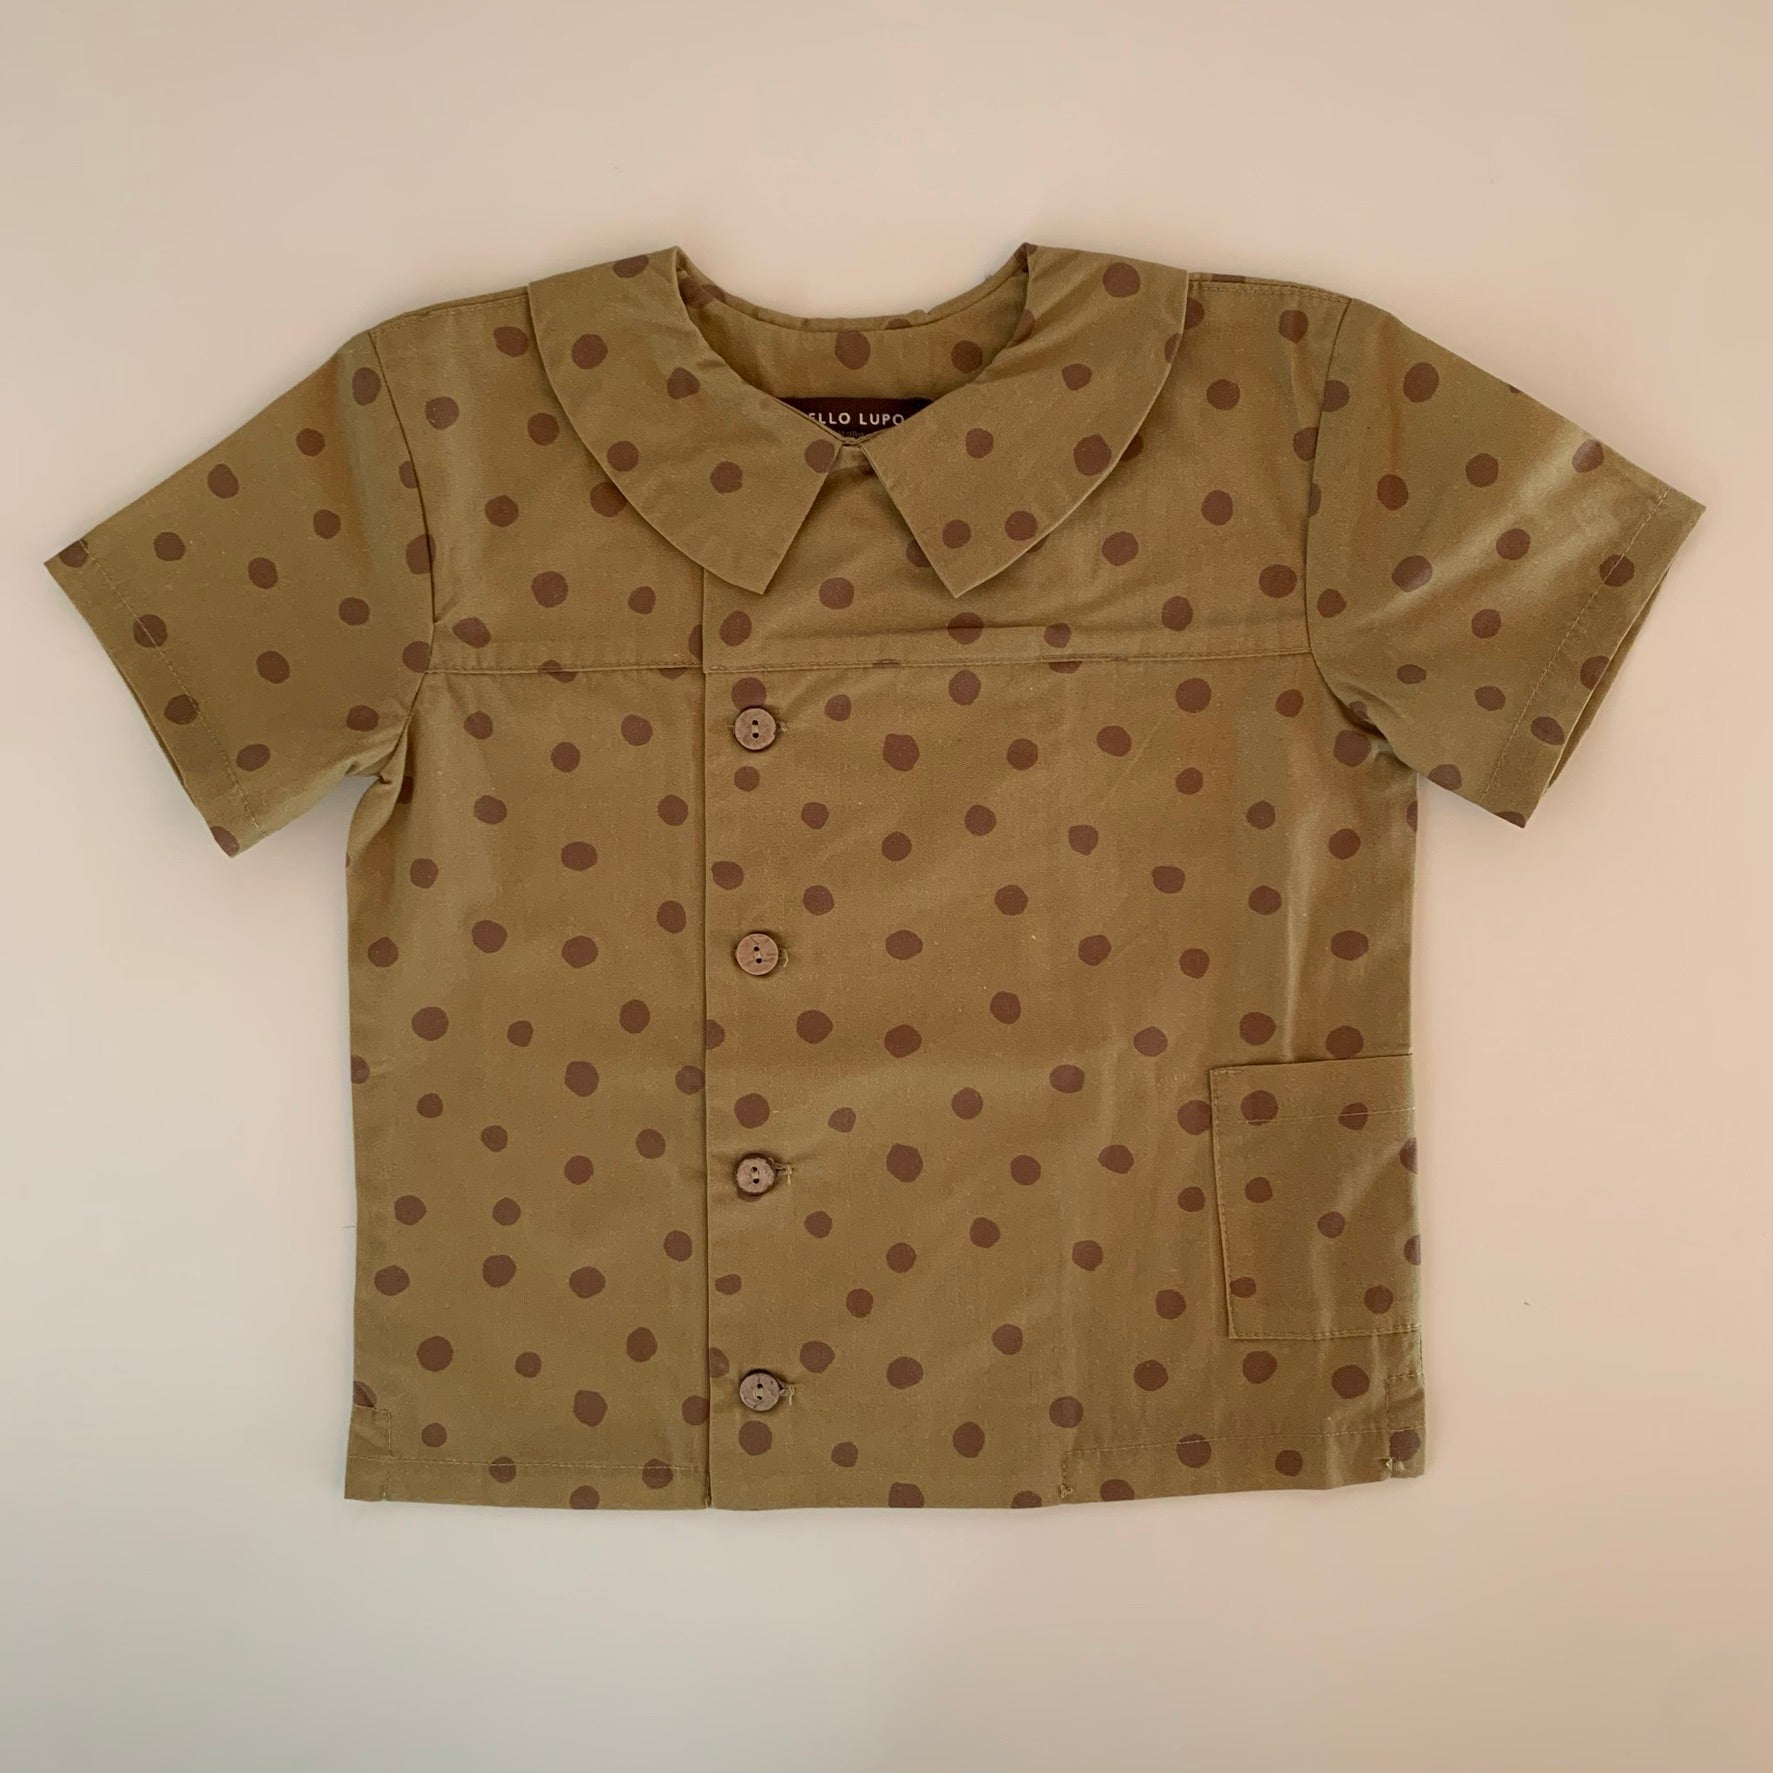 Gigi shirt, yellow / brown dots